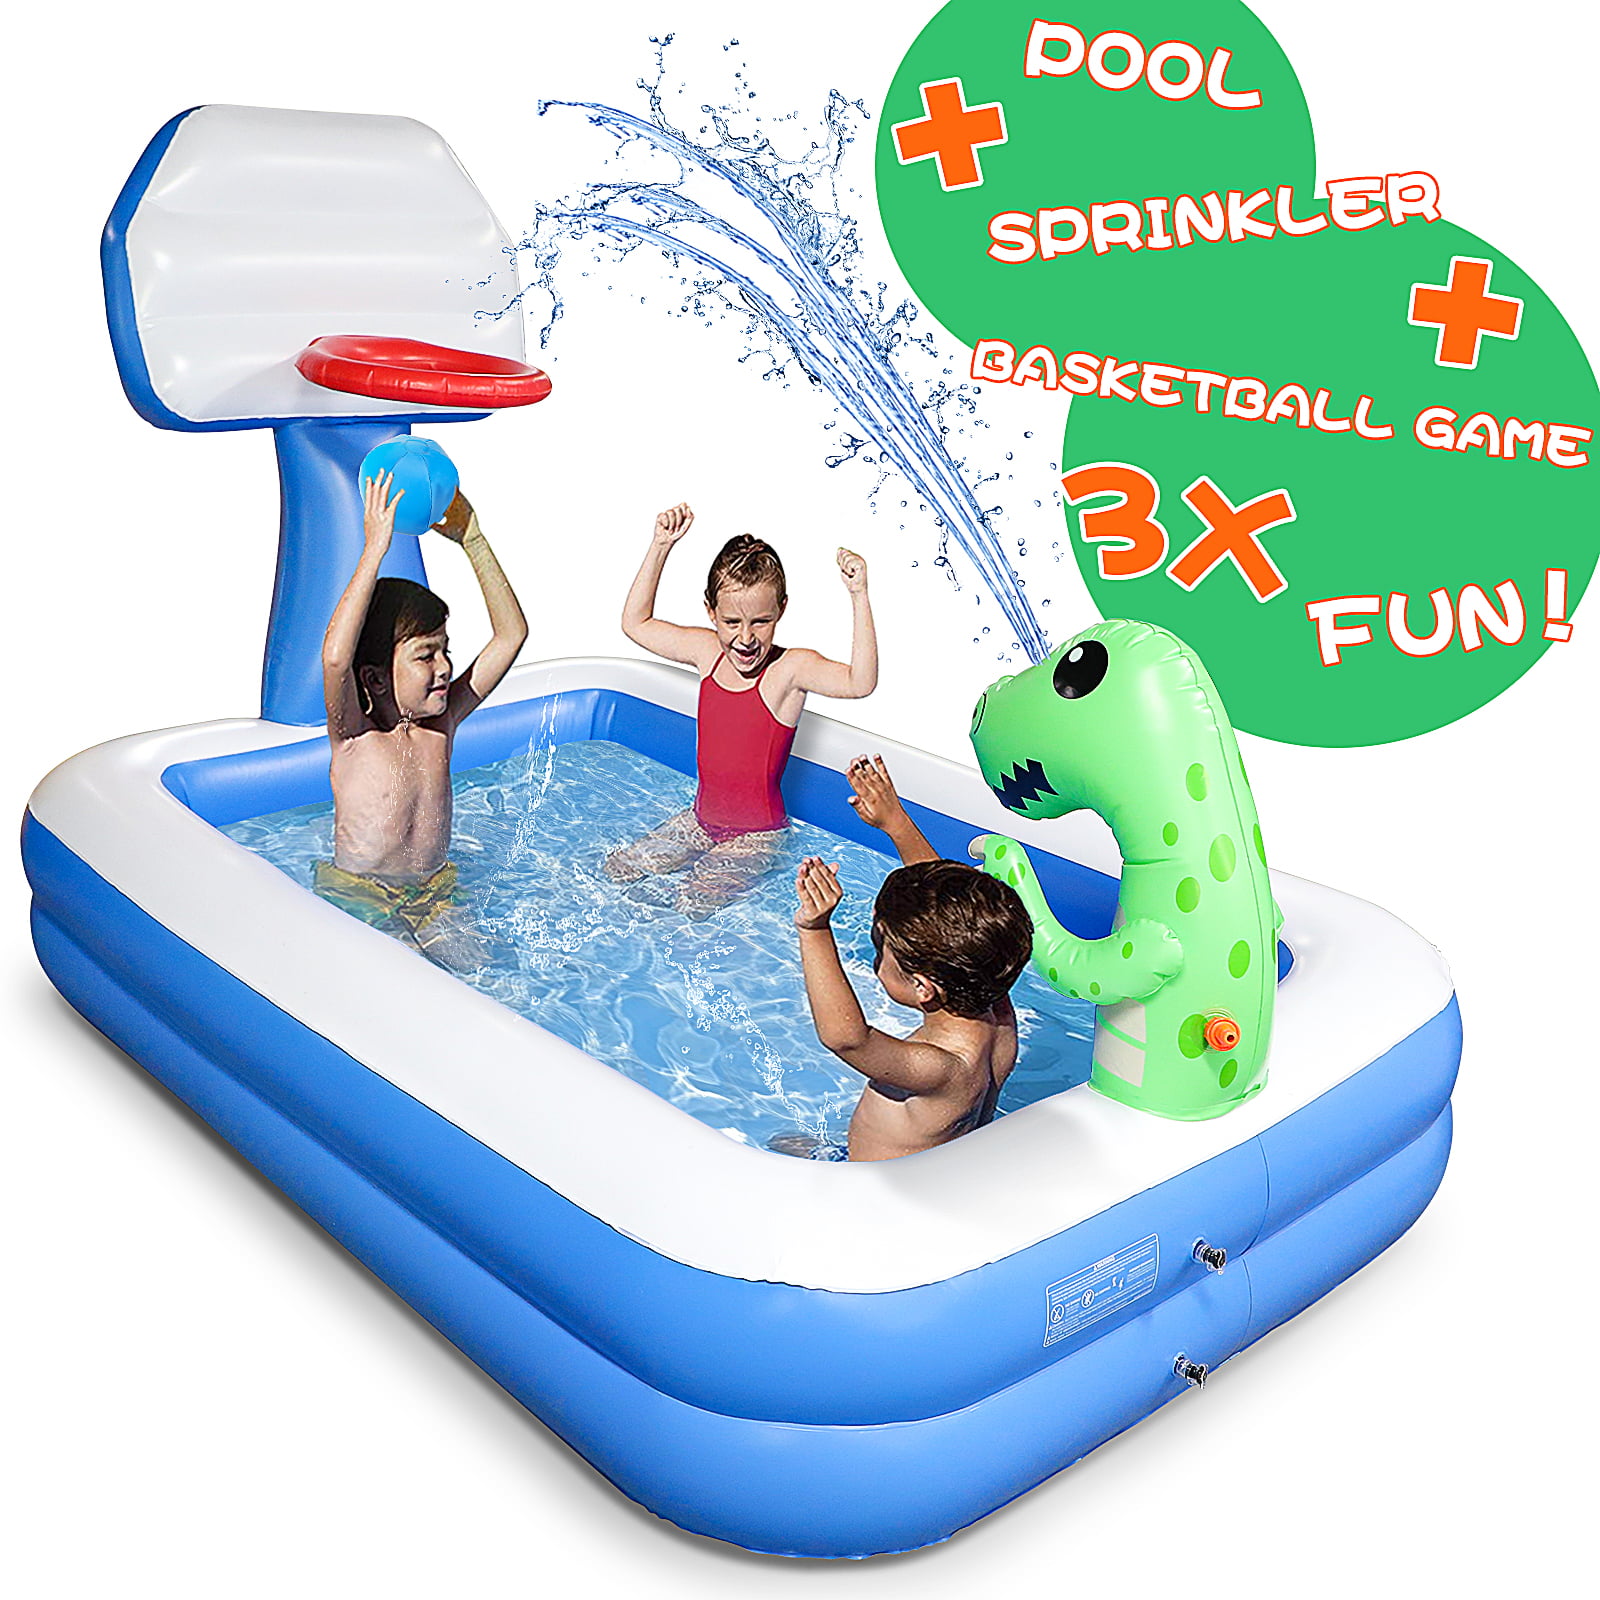 JLJLJL Splash Pad Inflatable Swimming Pool,Water Play Center with Water Slides Dinosaur Sprinklers Suitable for Kids Children Ages 3+